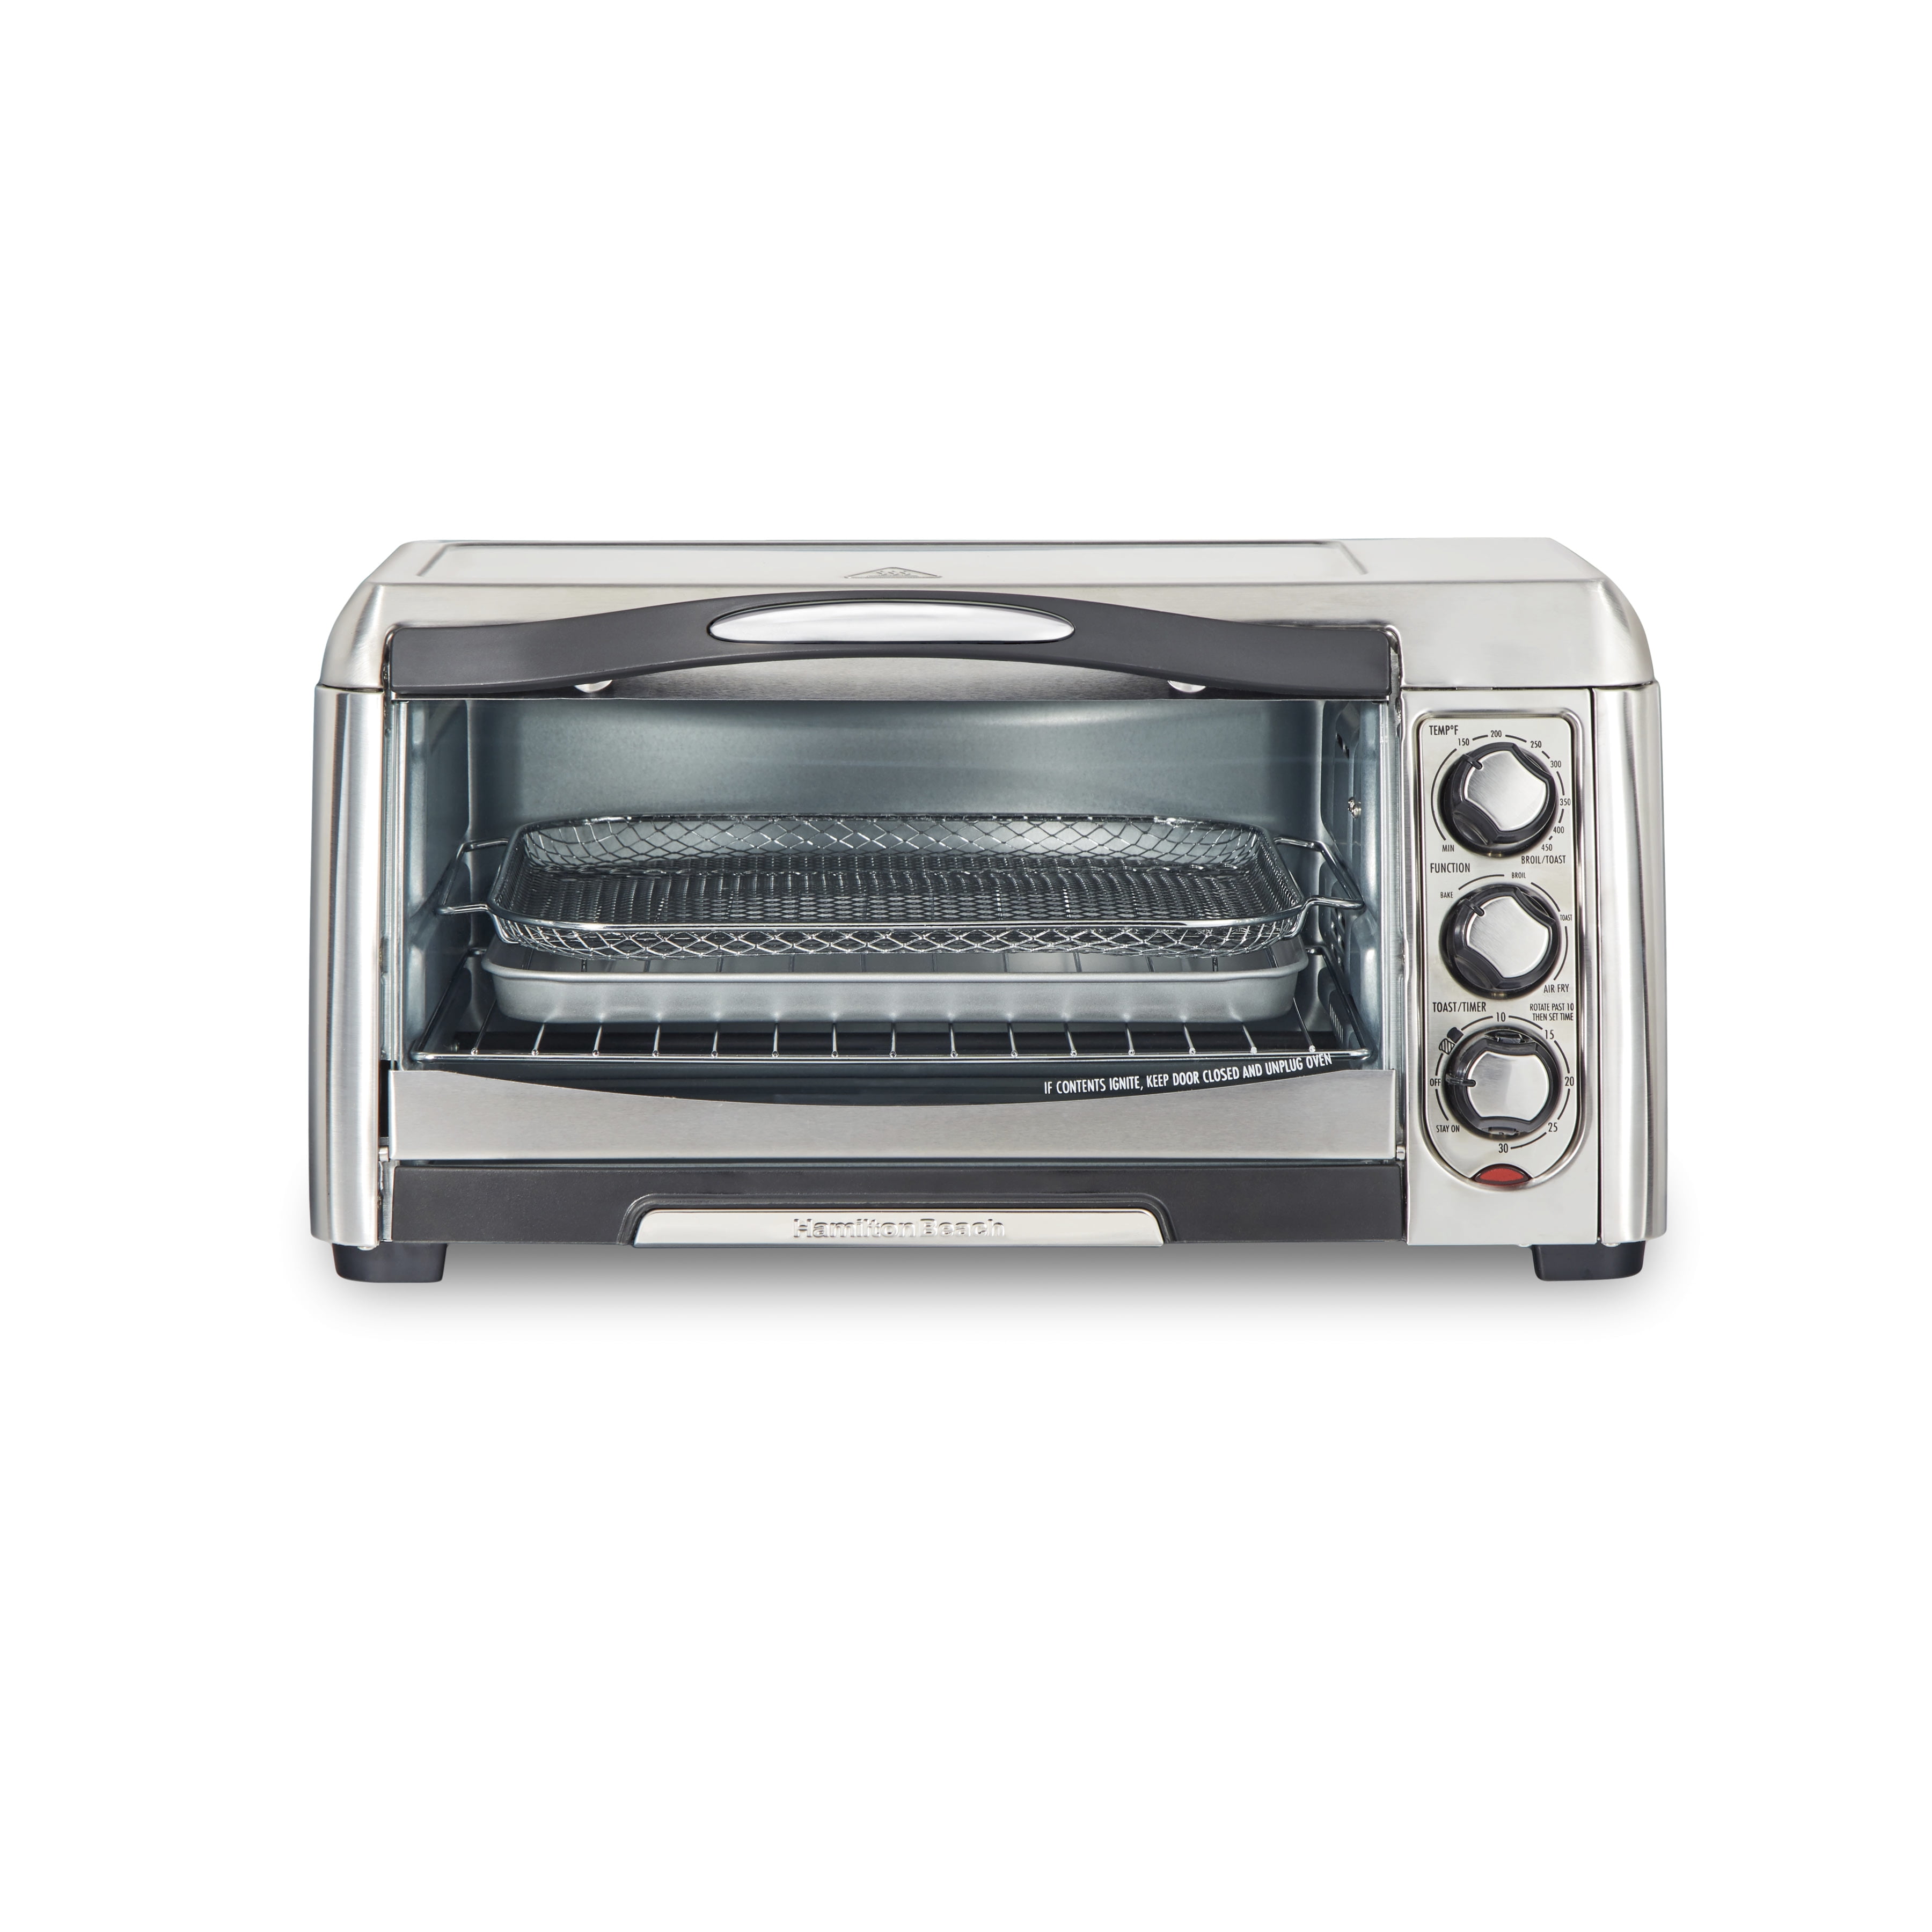 Hamilton Beach Sure-Crisp Air Fry Toaster Oven, 6 Slice